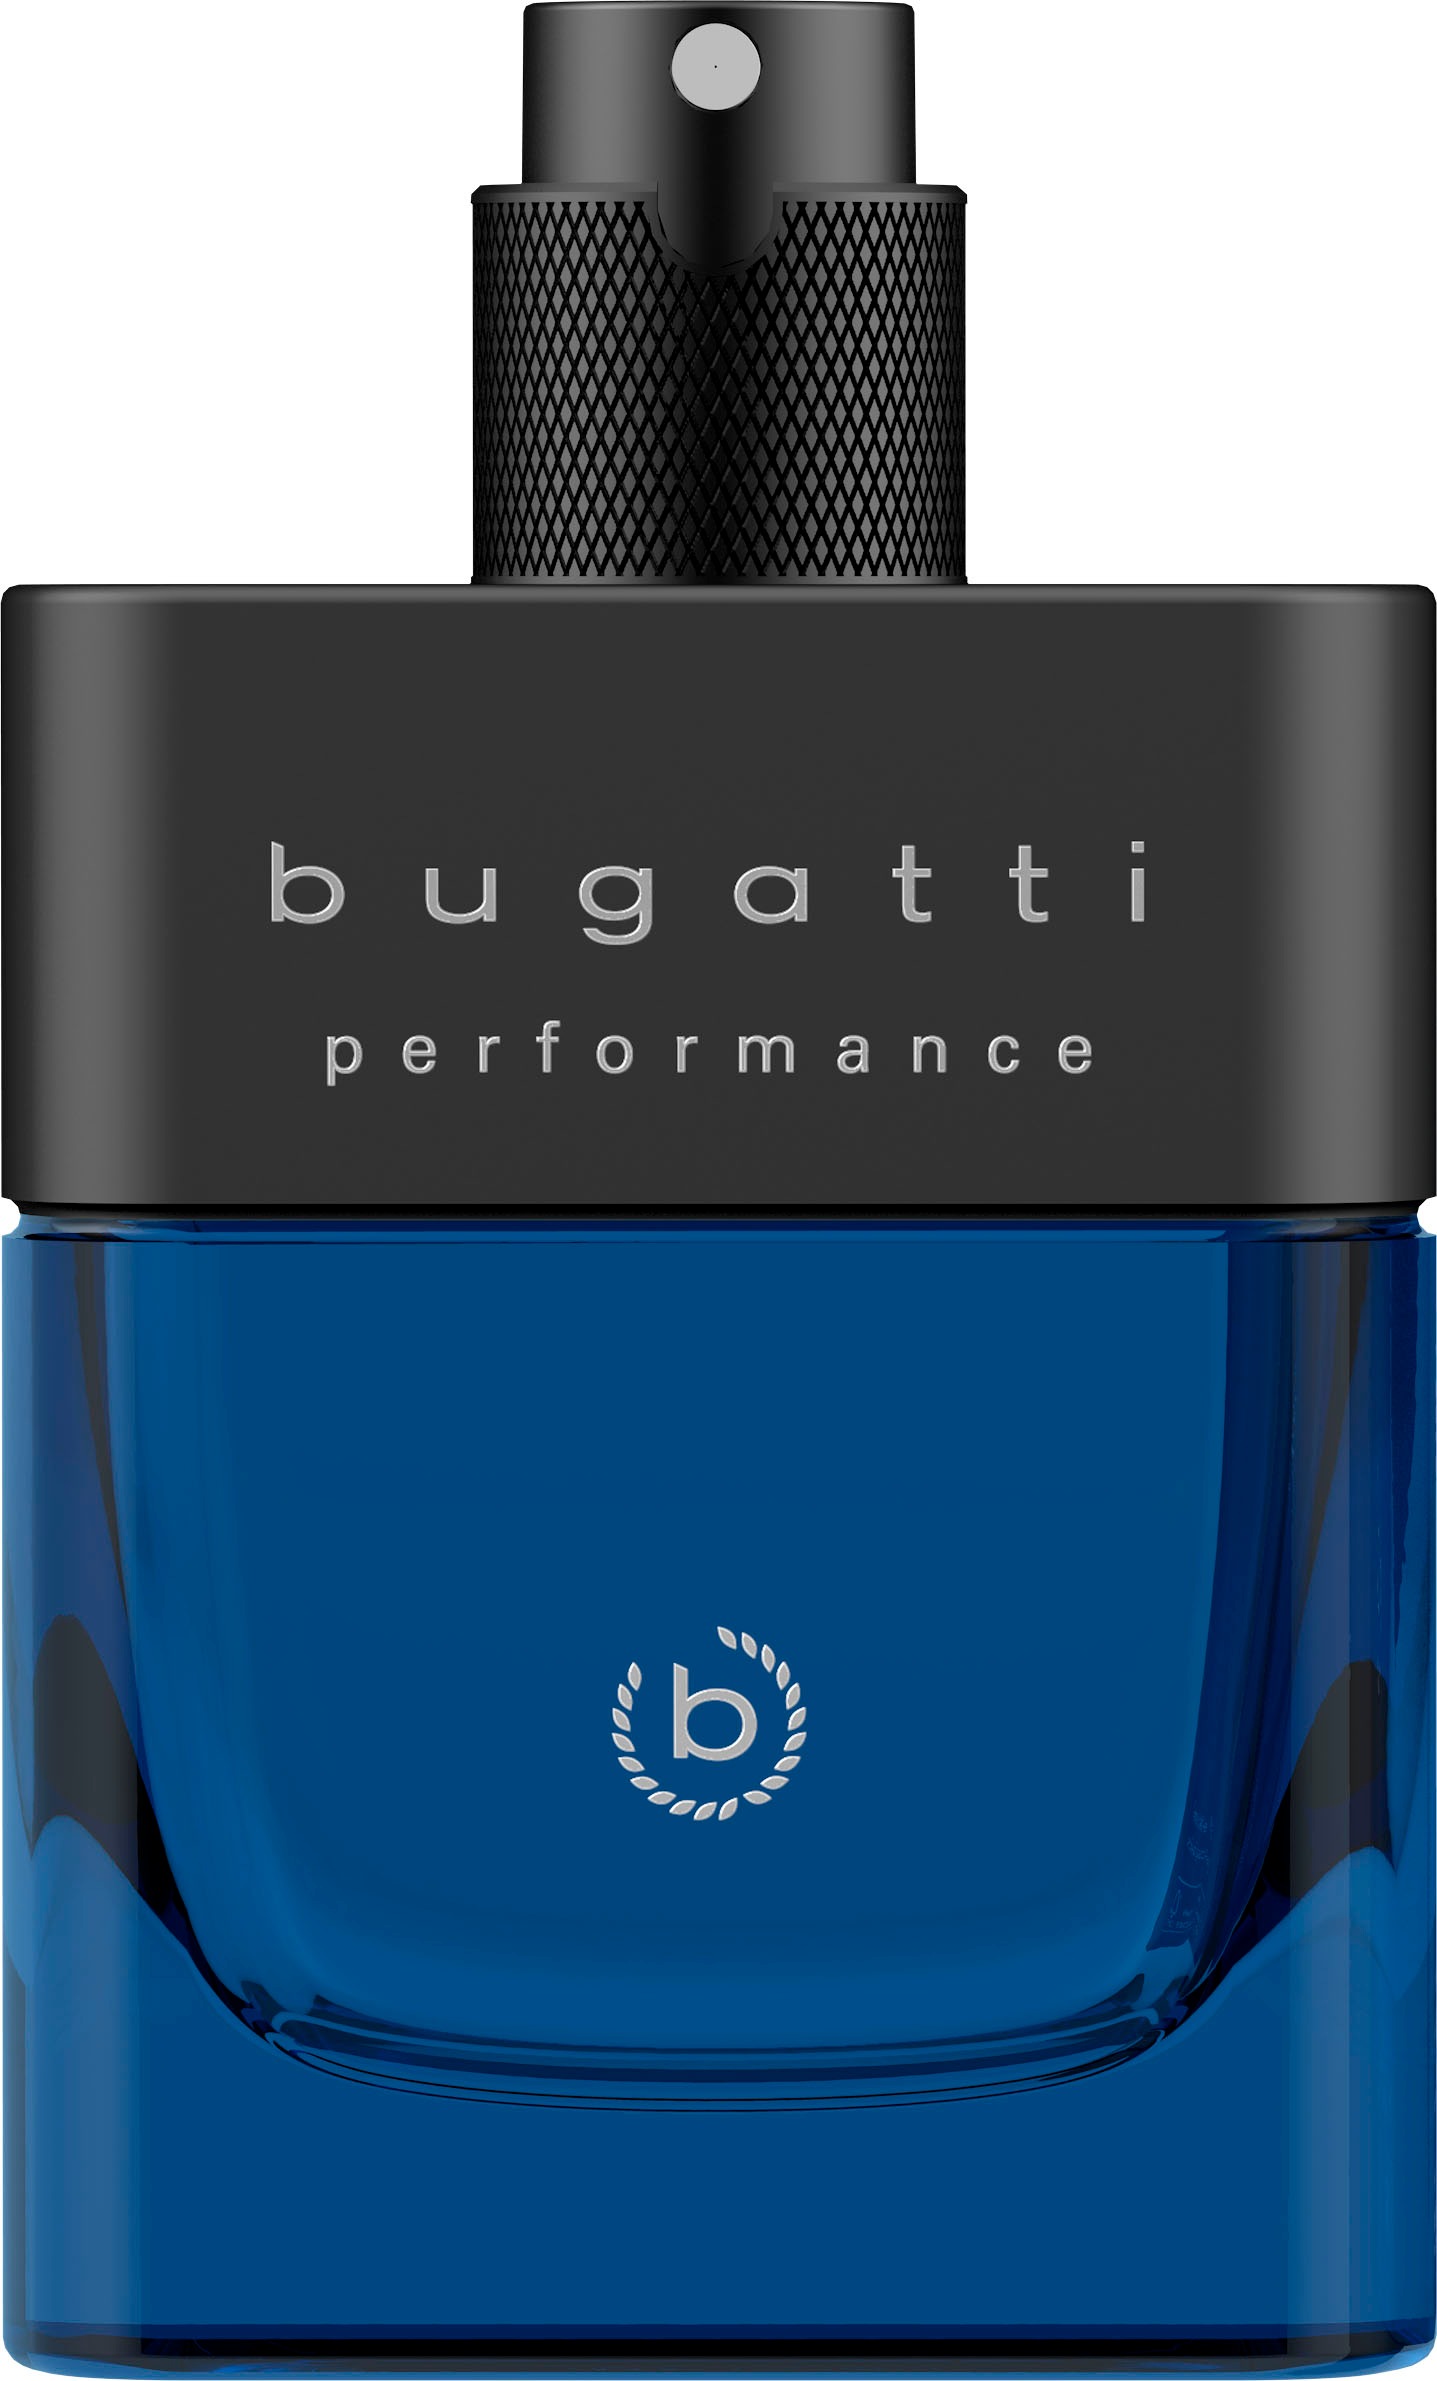 bugatti Eau bestellen »BUGATTI 100ml« Blue Deep OTTO Performance EdT de bei Toilette